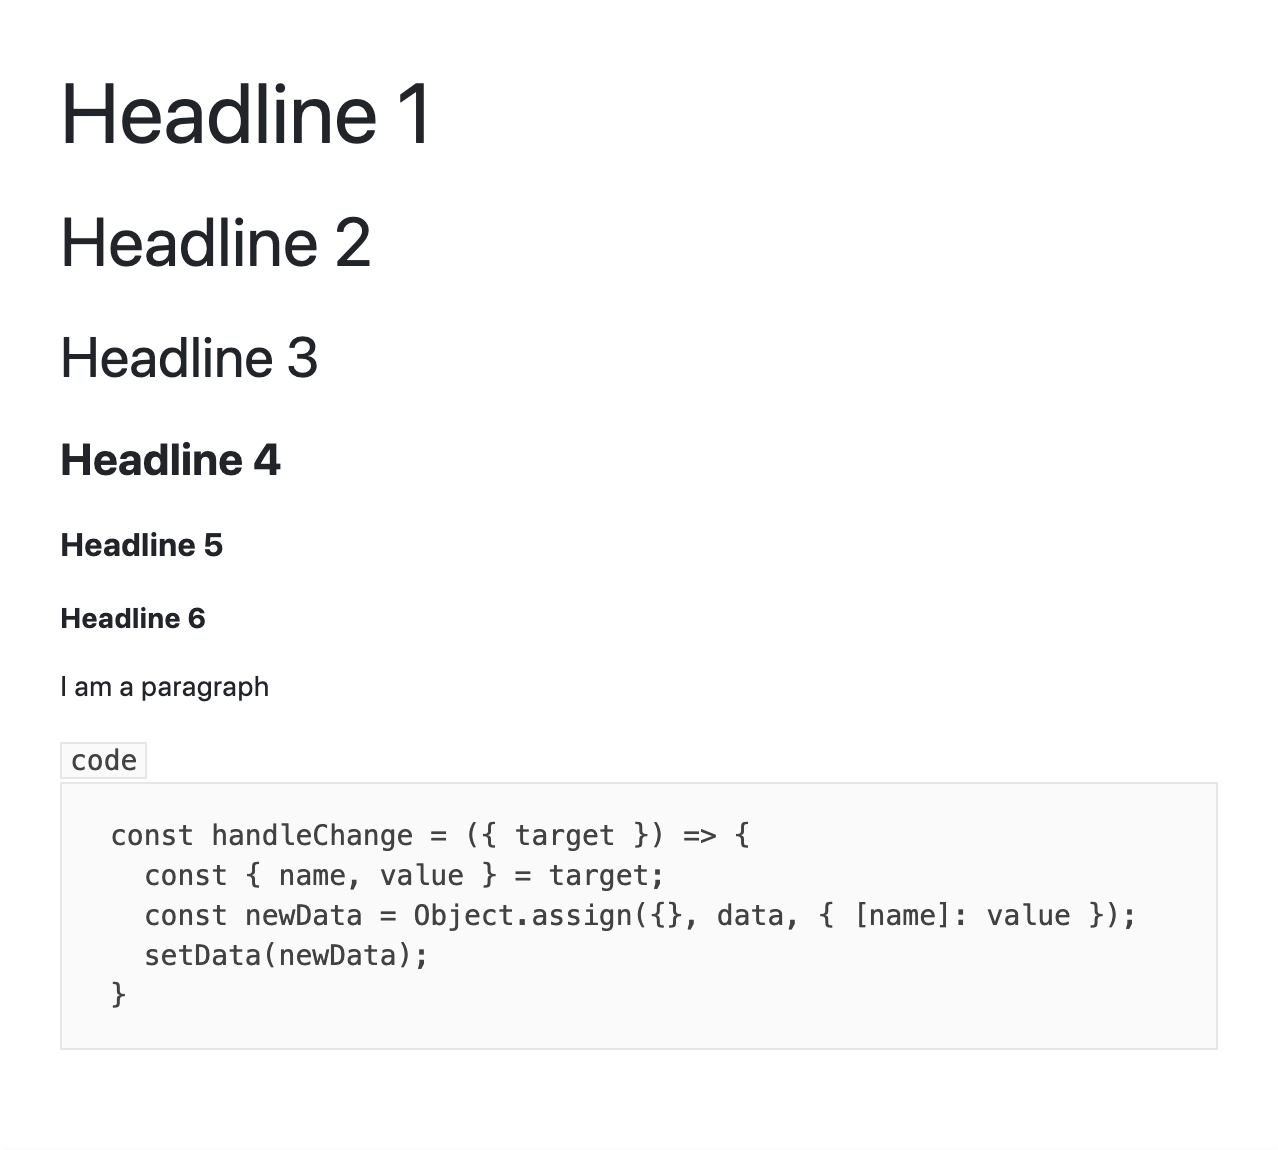 Headline styles 1 through 6, paragraph style, code style